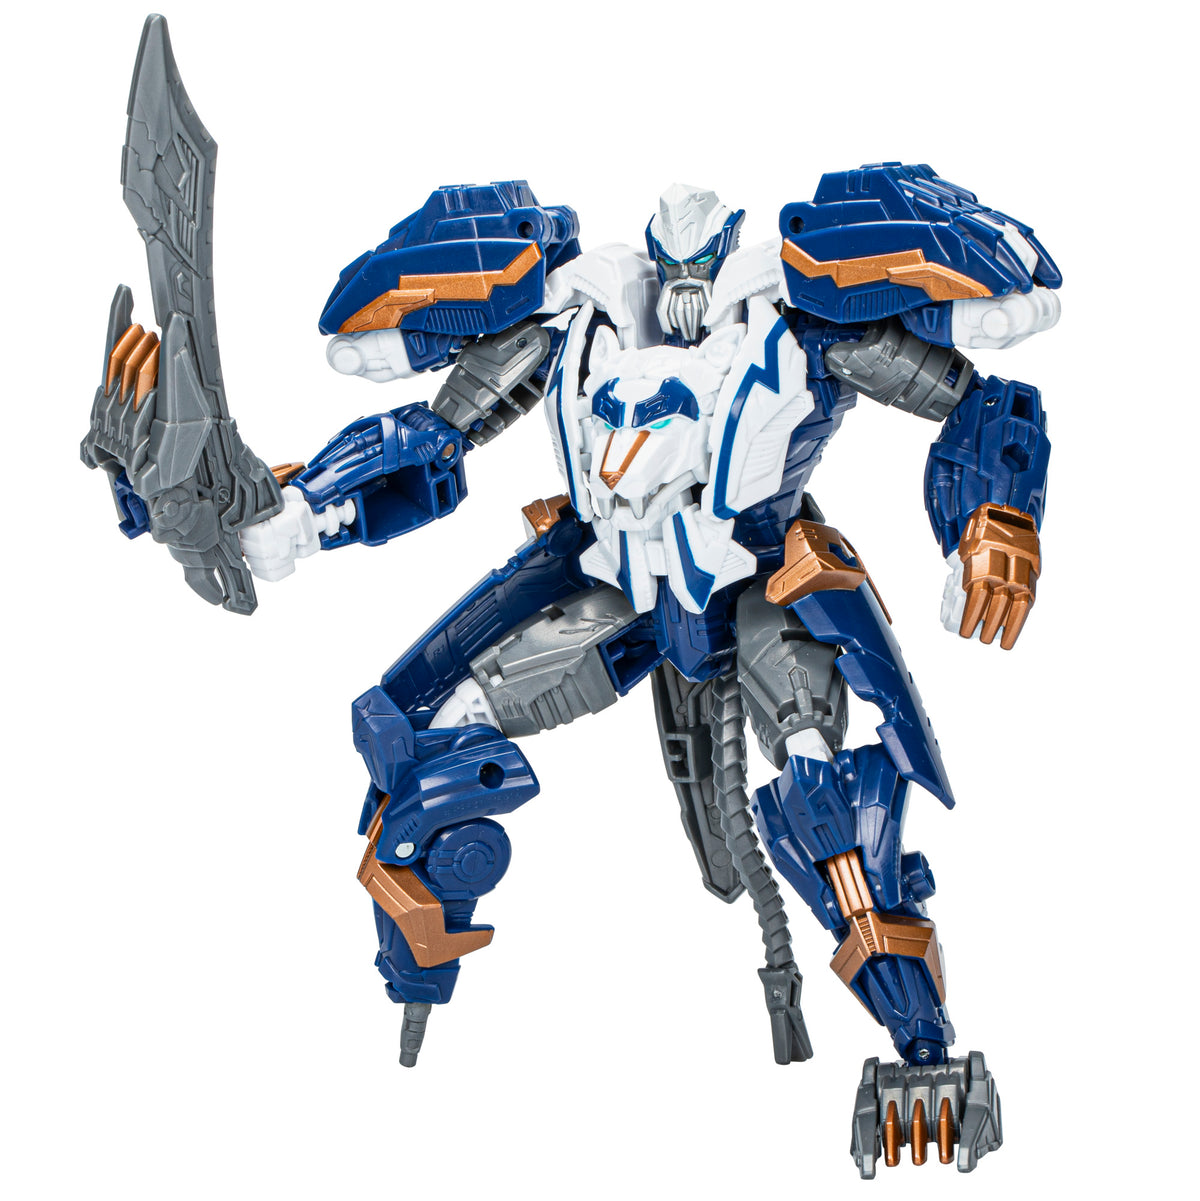 Transformers Toys Autobot Team Combiner Pack - 4 Figure Gift Set –  Figures